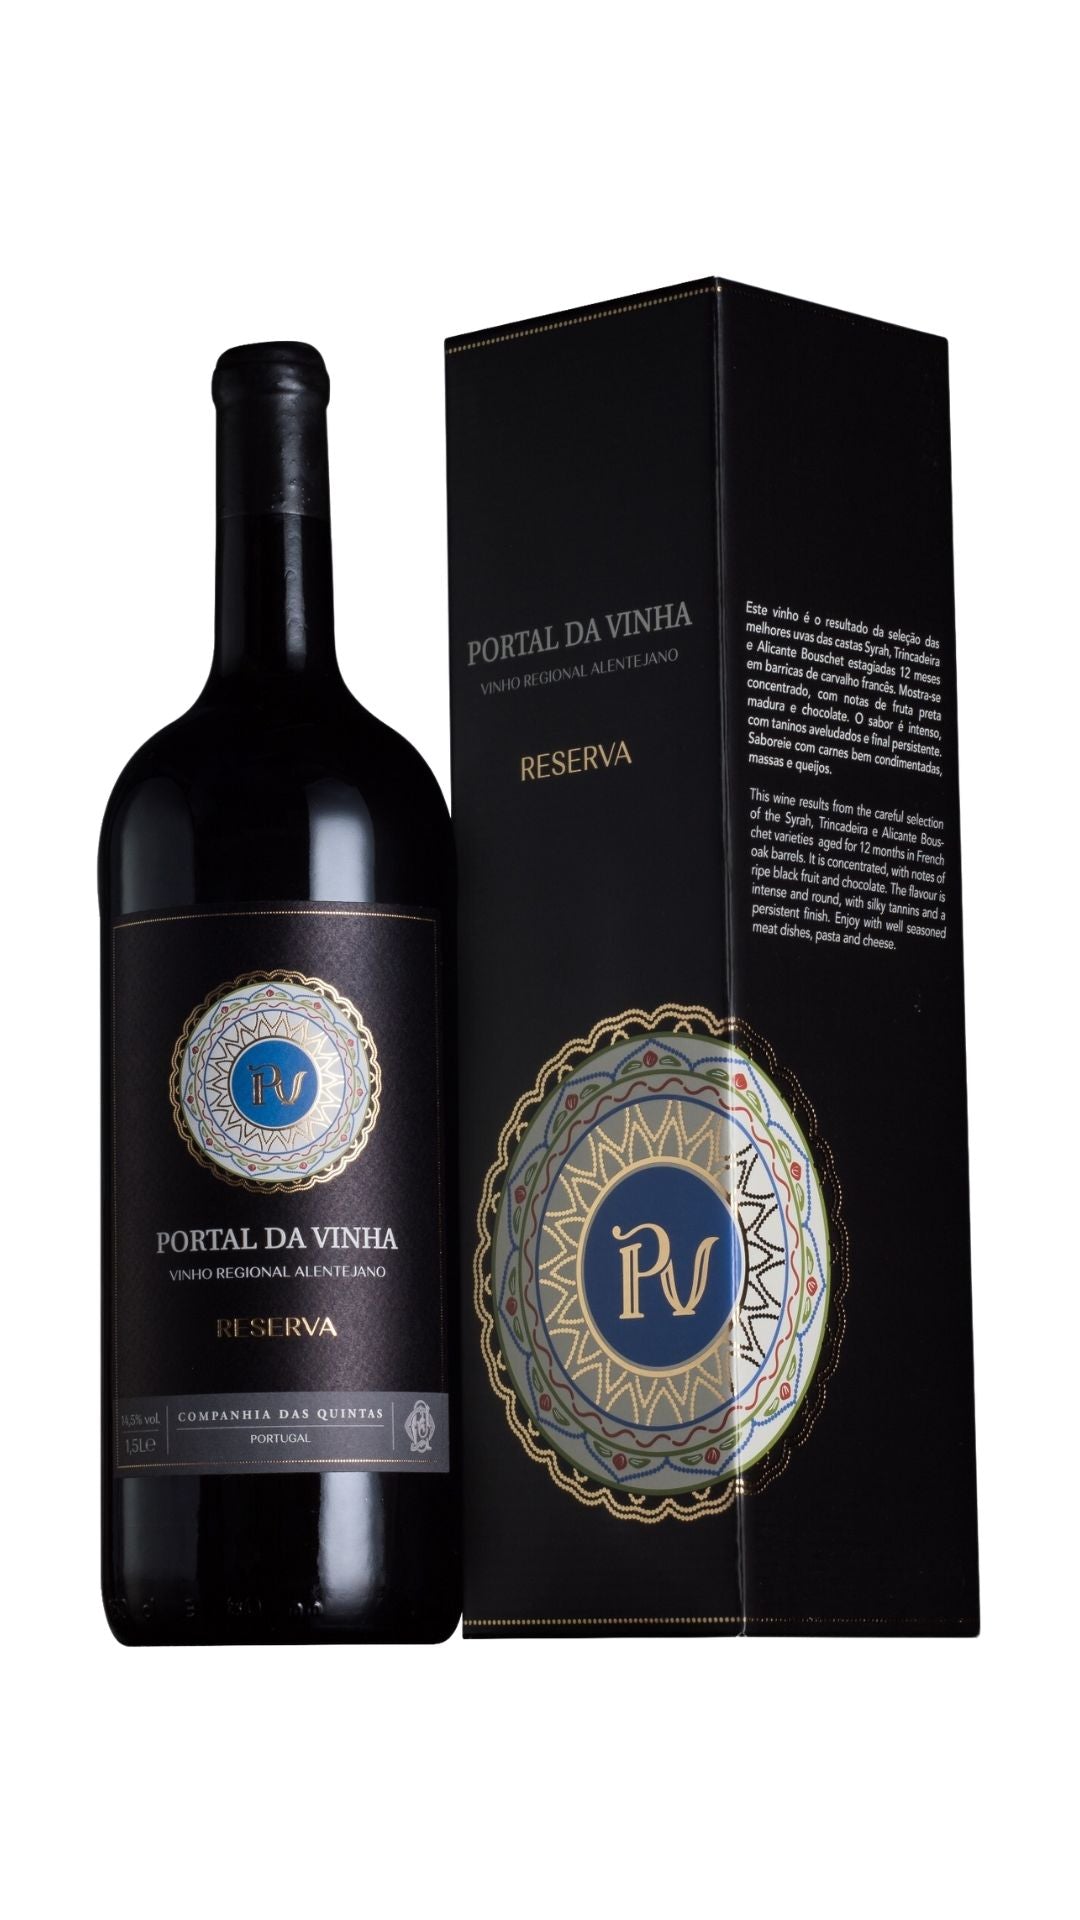 Portal da Vinha Tinto Garrafas Quintas (1.5L) – Reserva - 3 2019 das Loja Magnum